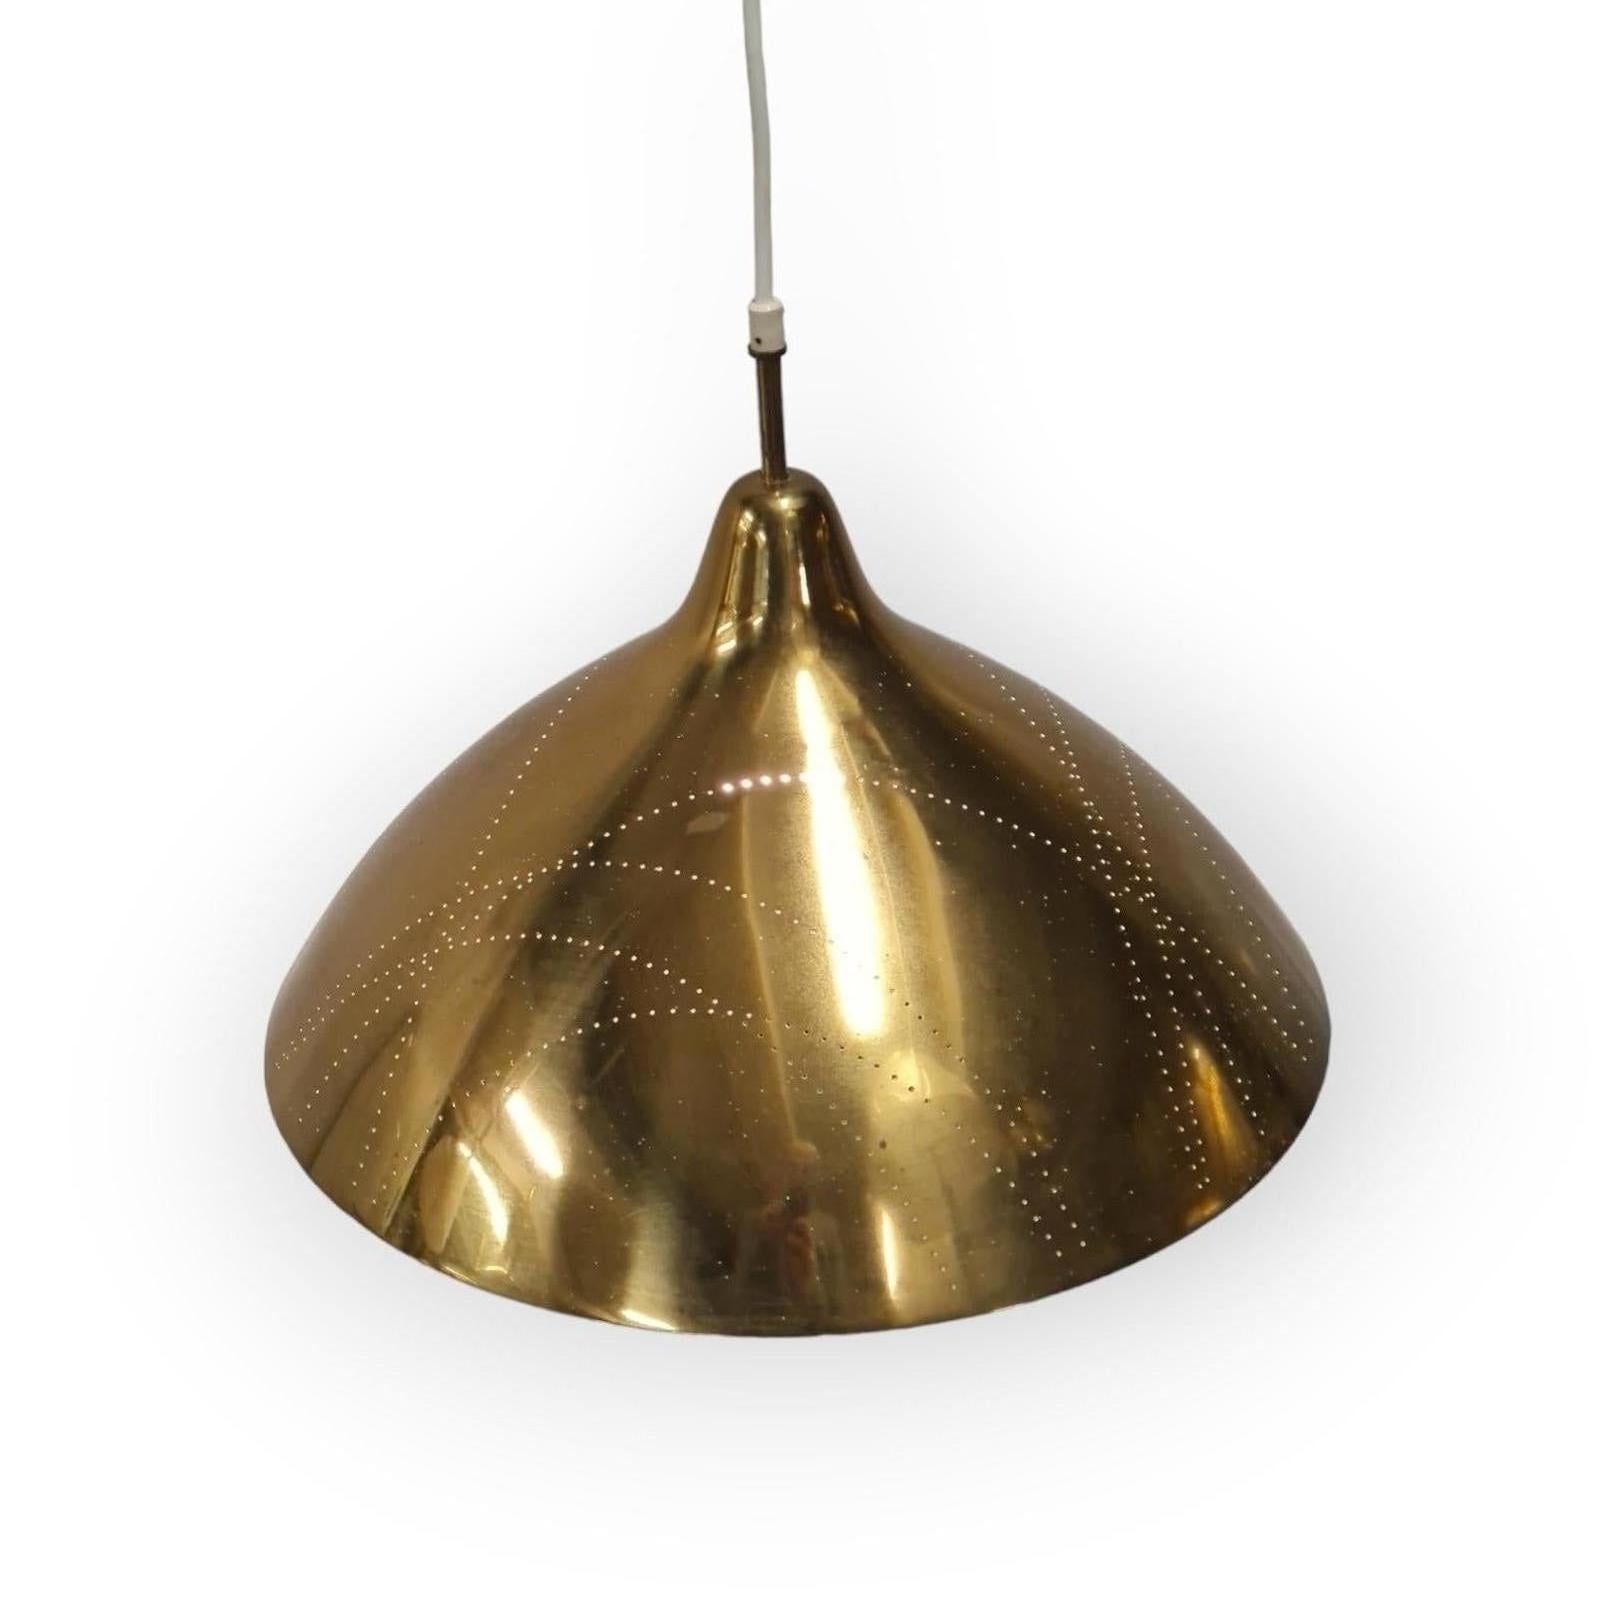 Scandinavian Modern Lisa Johansson-Papé Brass Ceiling Pendant with Line Perforation, Orno 1950s For Sale